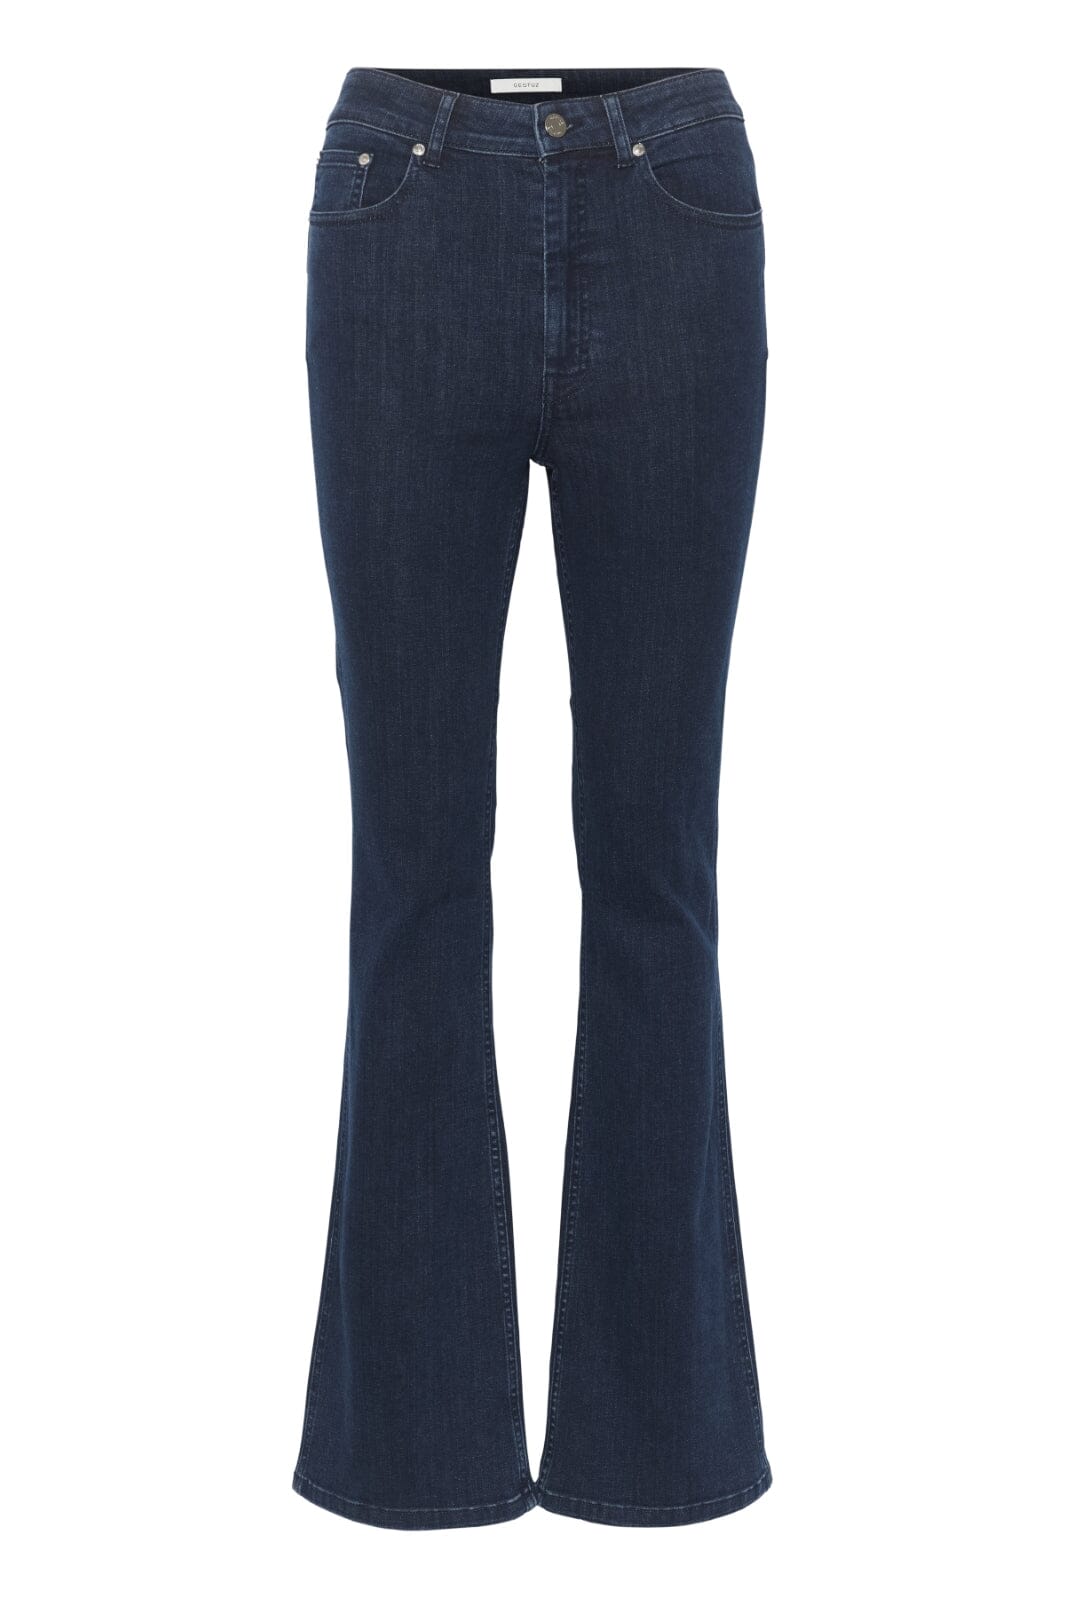 Gestuz - Rivygz Flared Jeans - 104610 Dark Blue Washed Jeans 